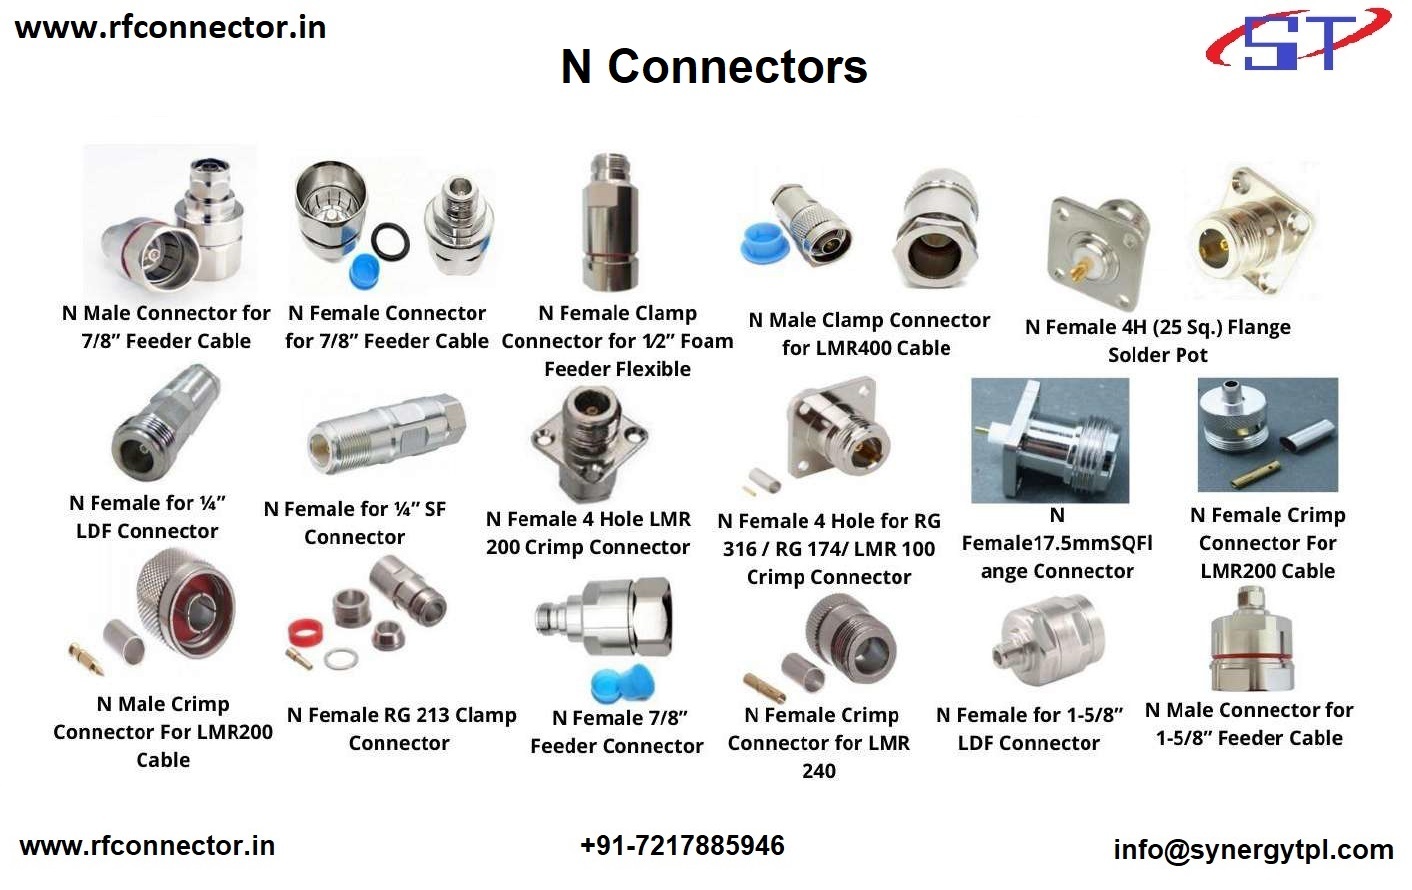 N F 1-2 SUPERFLEX CLAMP CONNECTOR